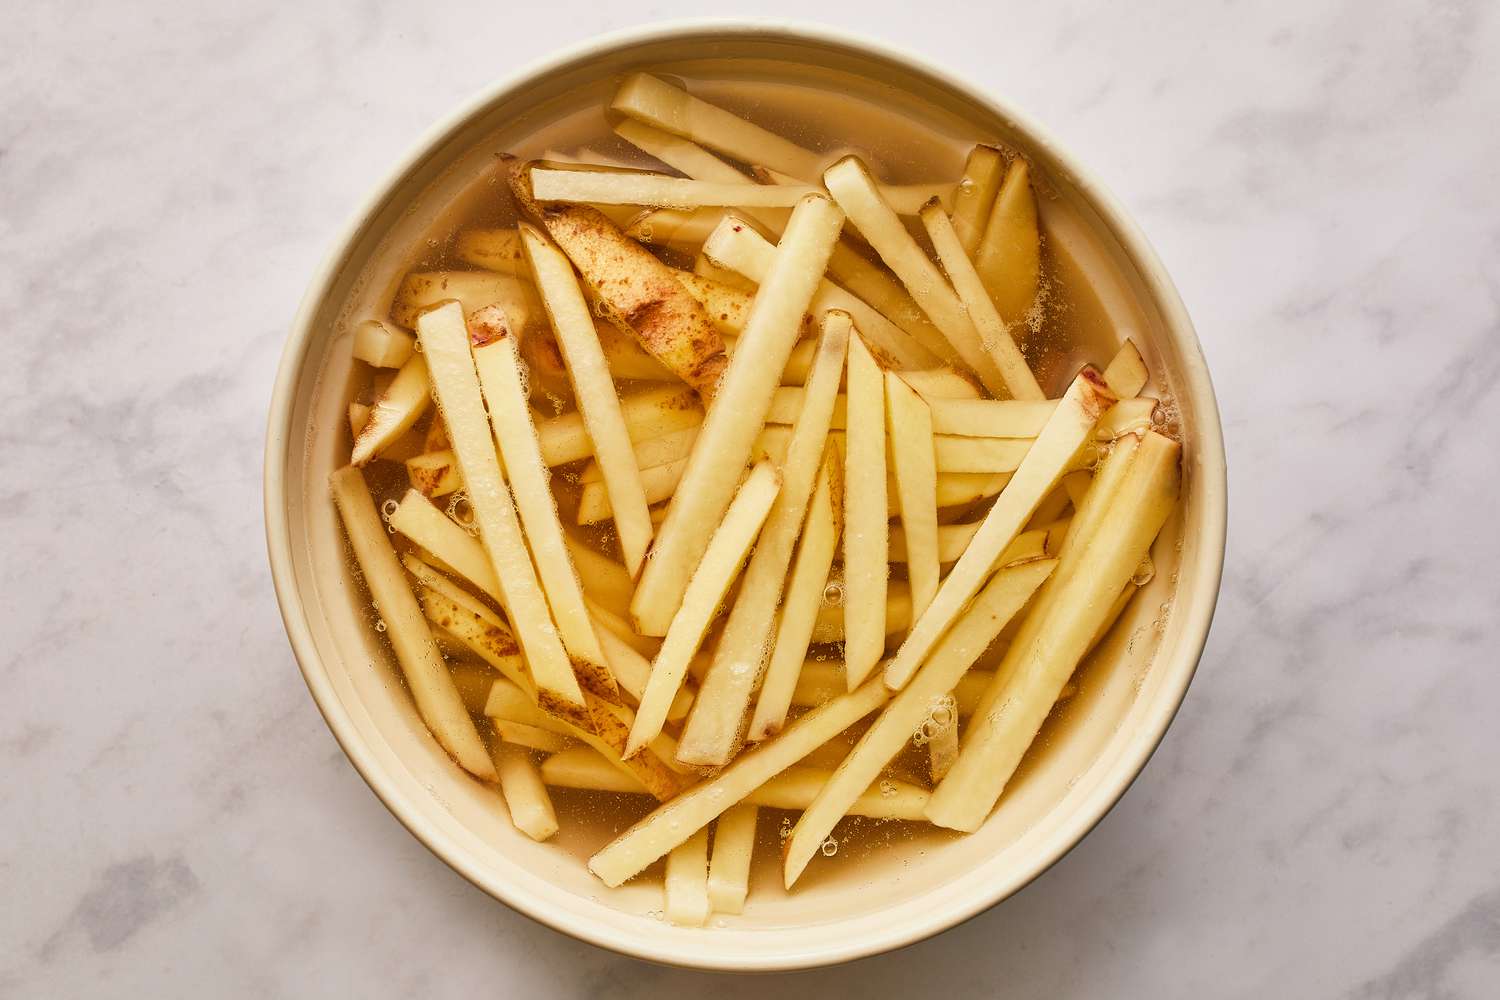 Soaking potatoes for fries